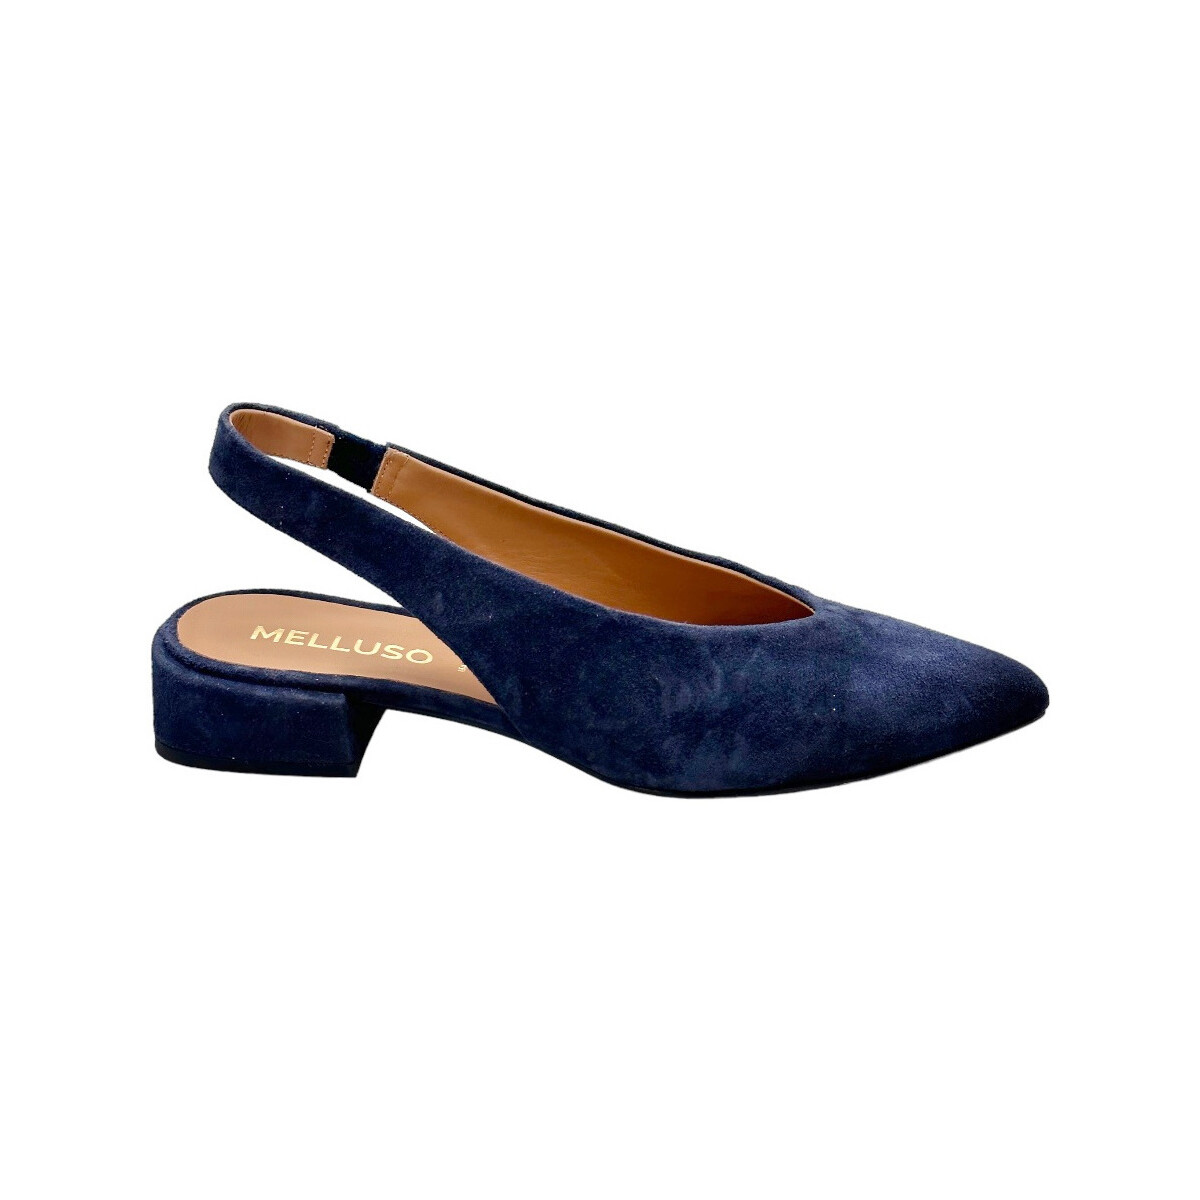 Chaussures Femme Sandales et Nu-pieds Melluso MELD156bl Bleu